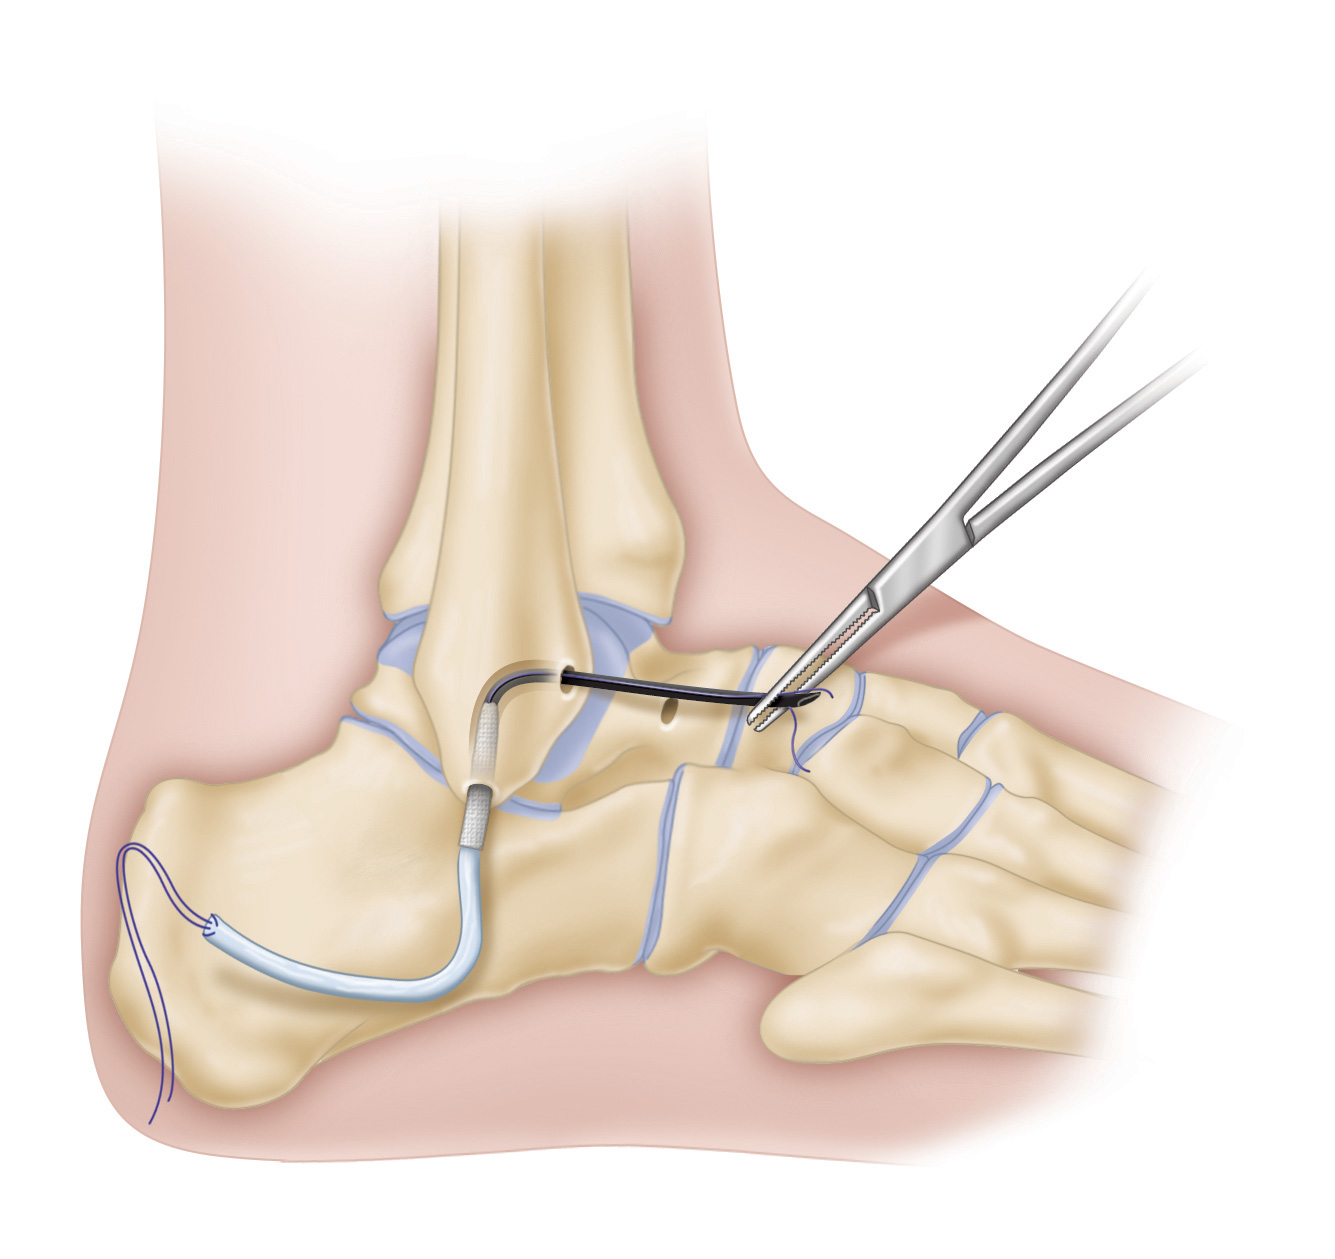 Ankle repair